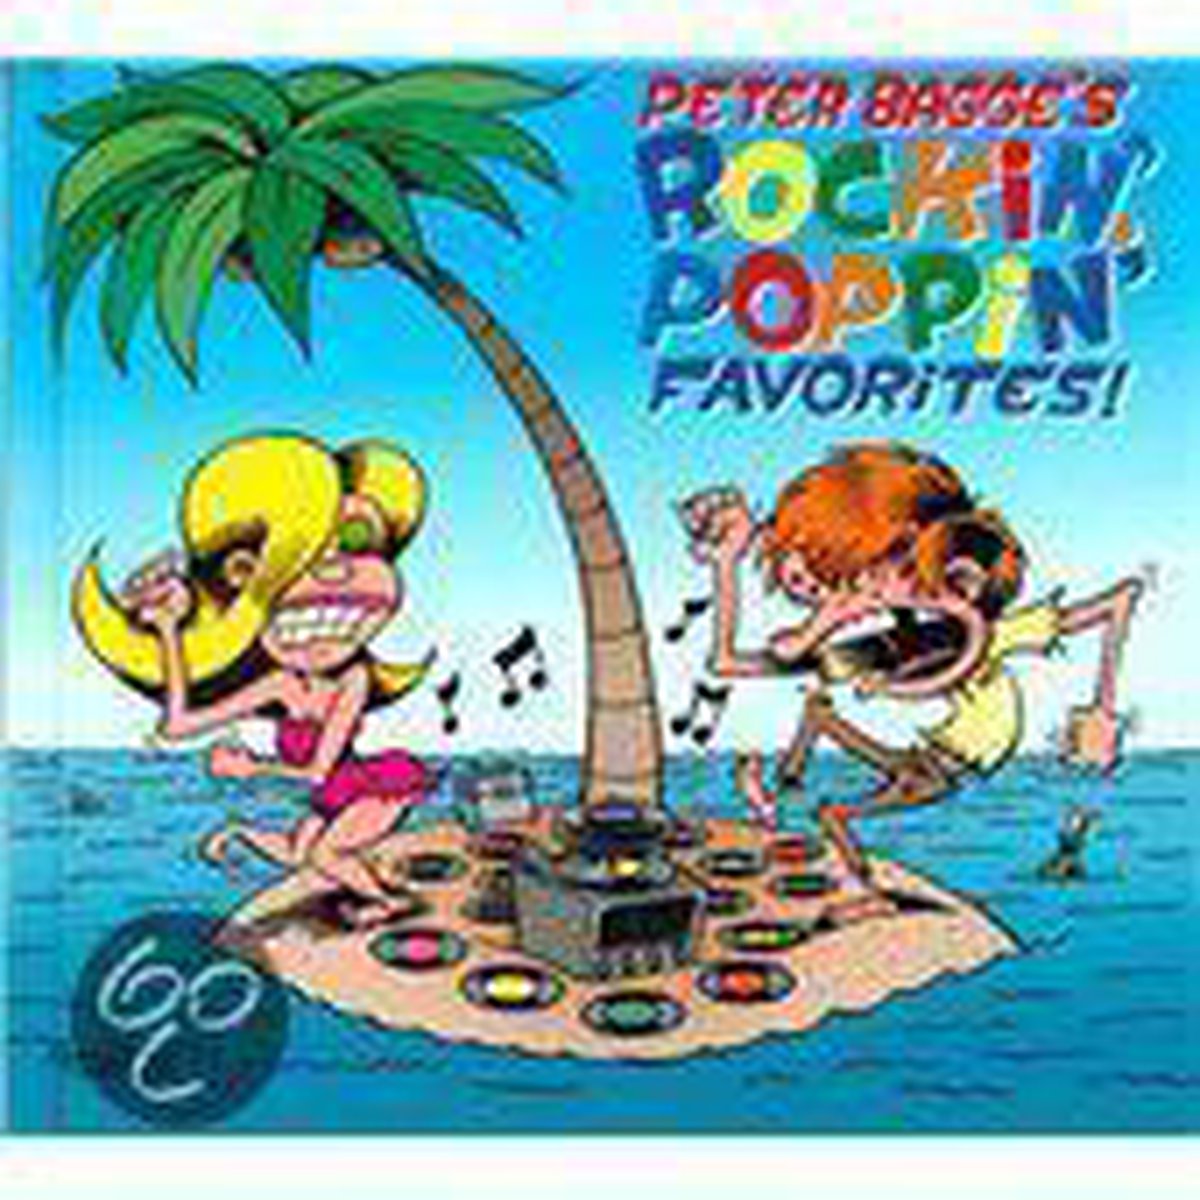 Peter Bagge's Rockin', Poppin' Favorites! - Peter Bagge